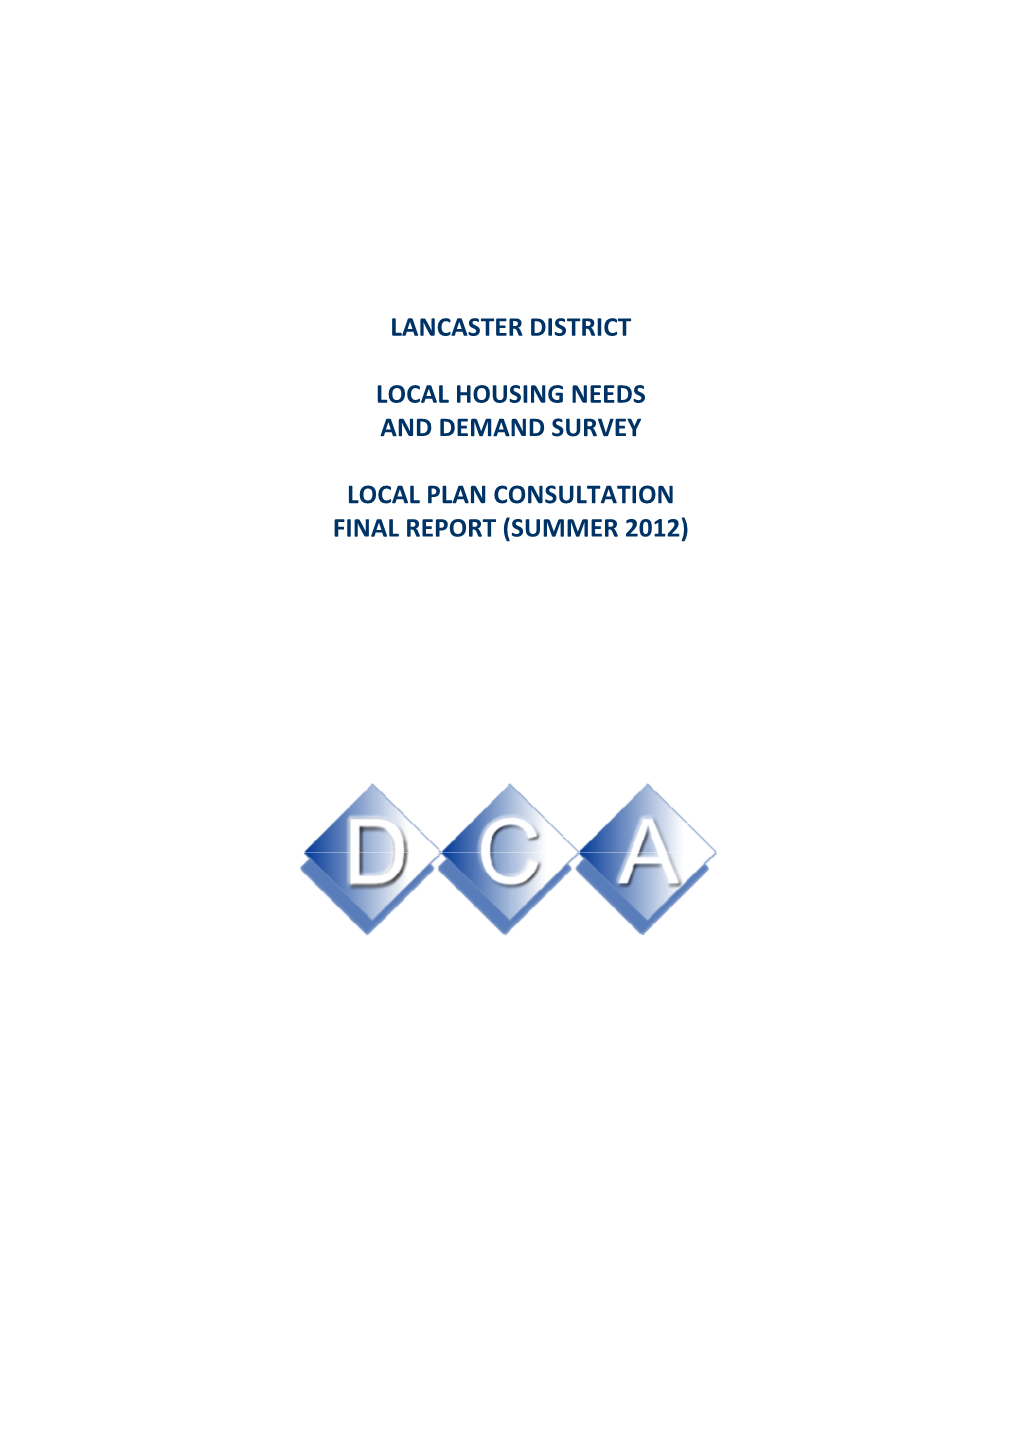 Lancaster District Local Housing Needs and Demand Survey ‐ 2011